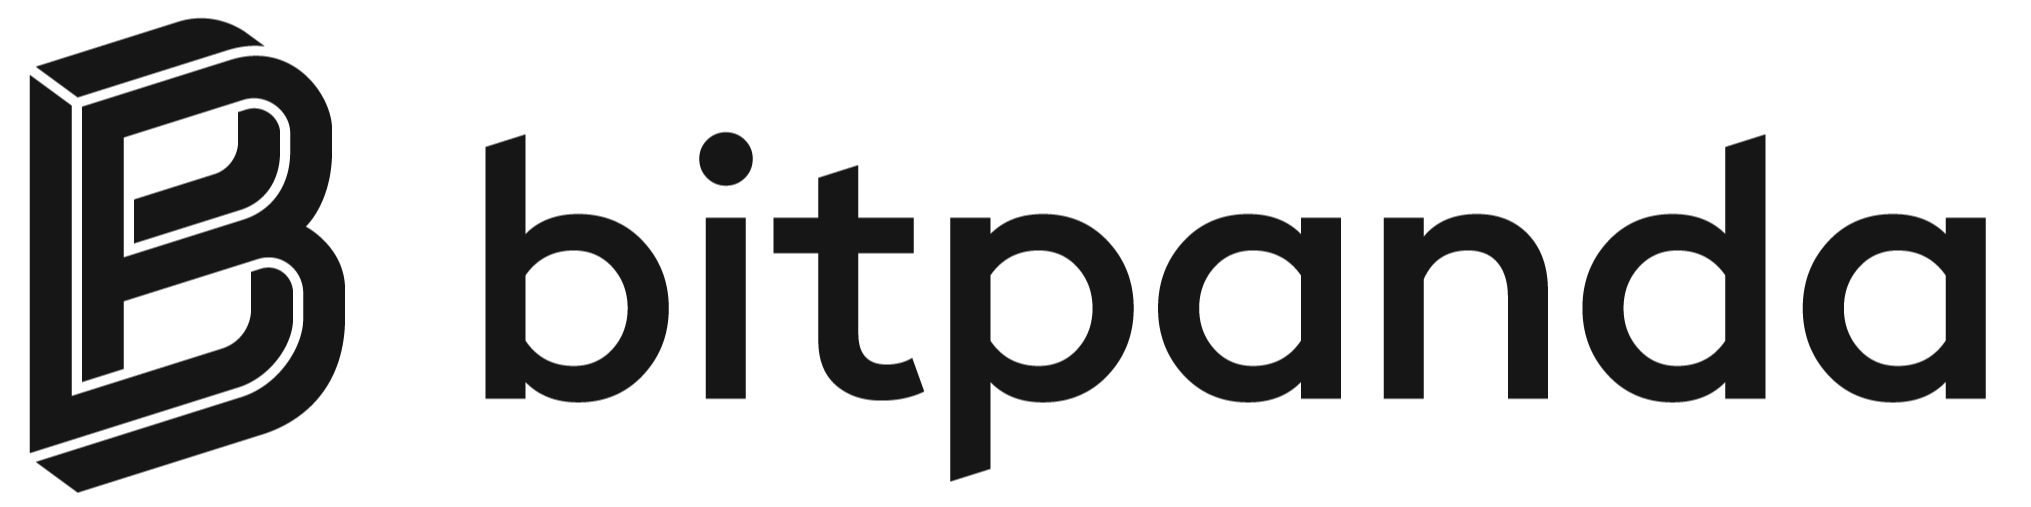 bitpanda logo logo